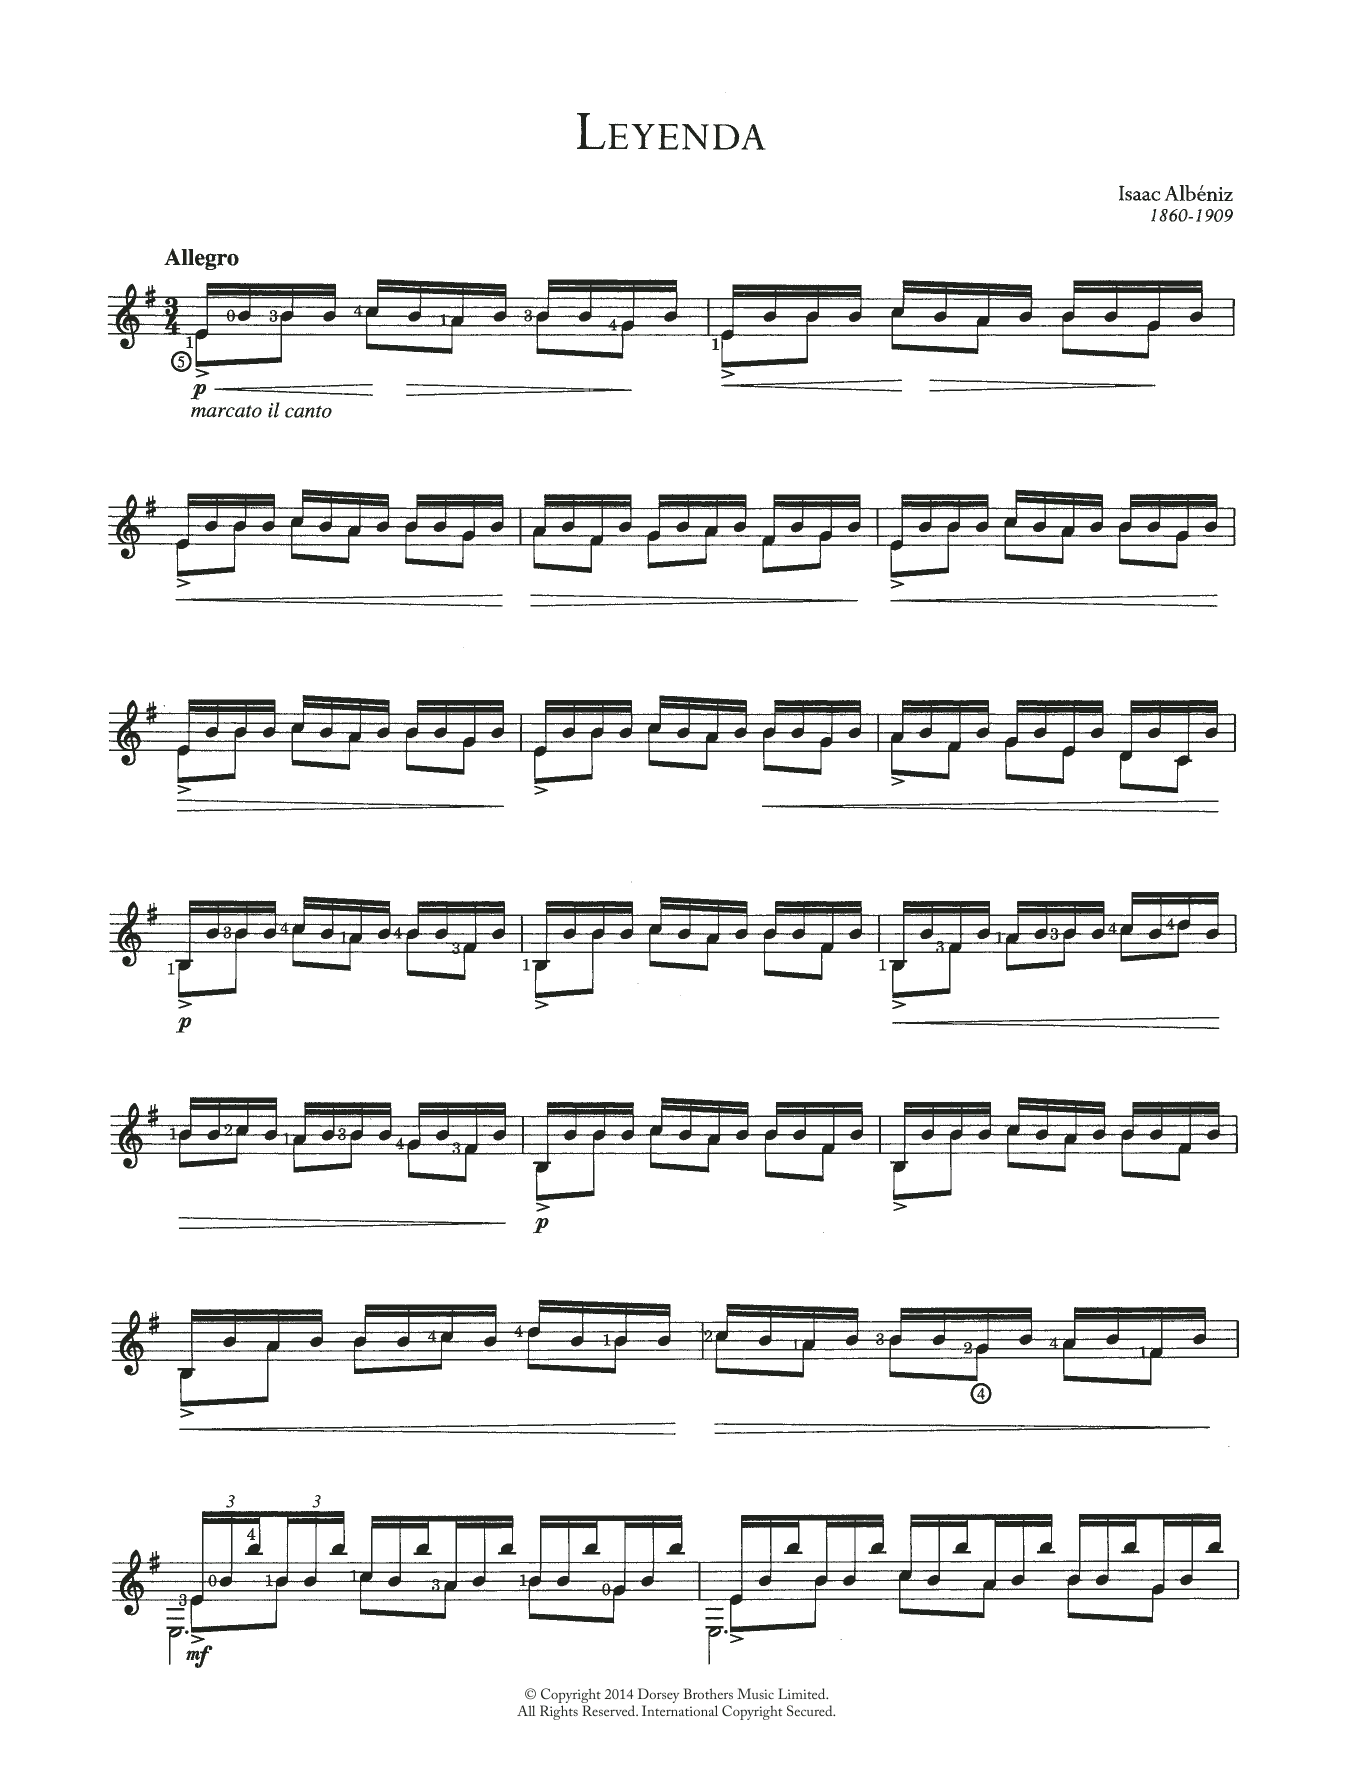 Isaac Albéniz Leyenda (Asturias) Sheet Music Notes & Chords for Guitar - Download or Print PDF